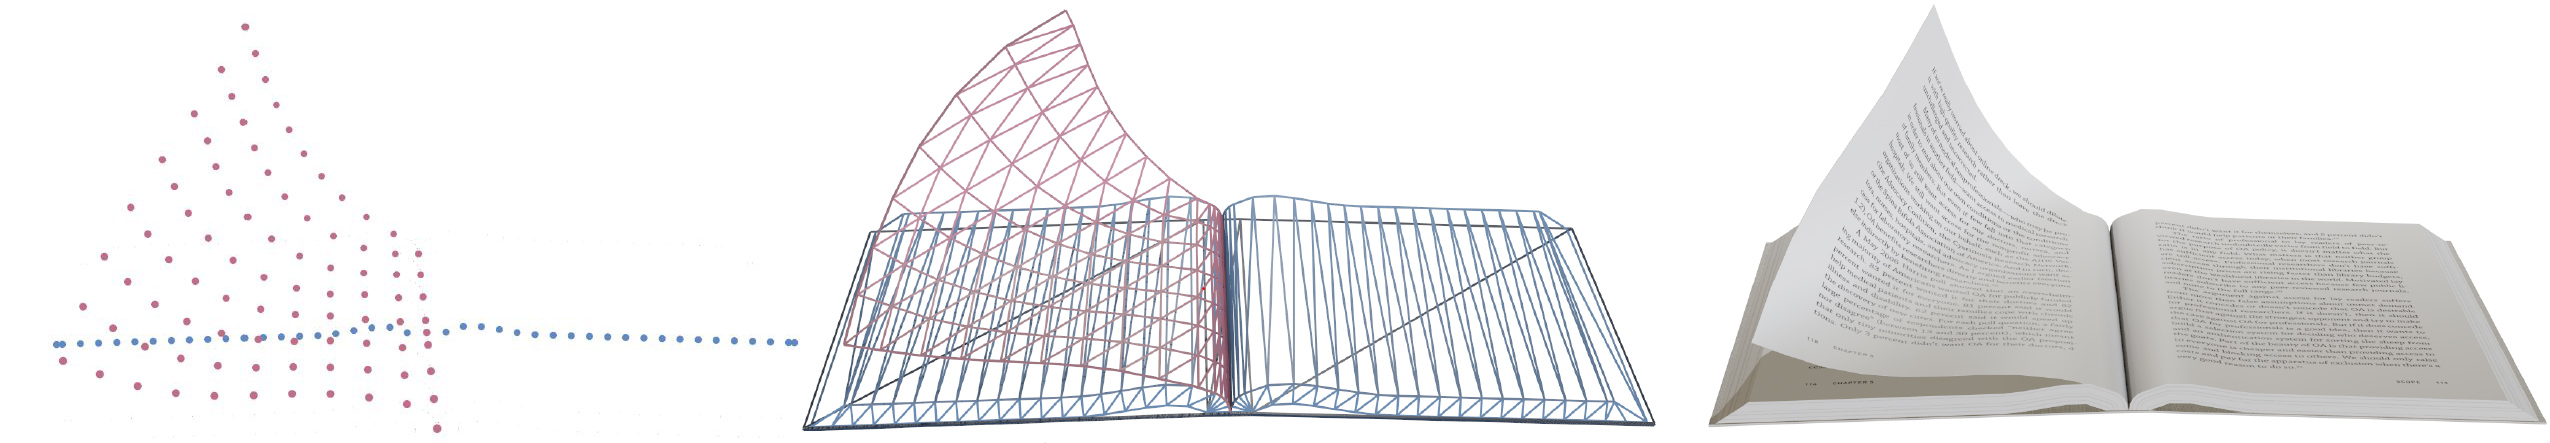 igl-interactive-geometry-lab-eth-zurich-physically-based-book-simulation-with-freeform